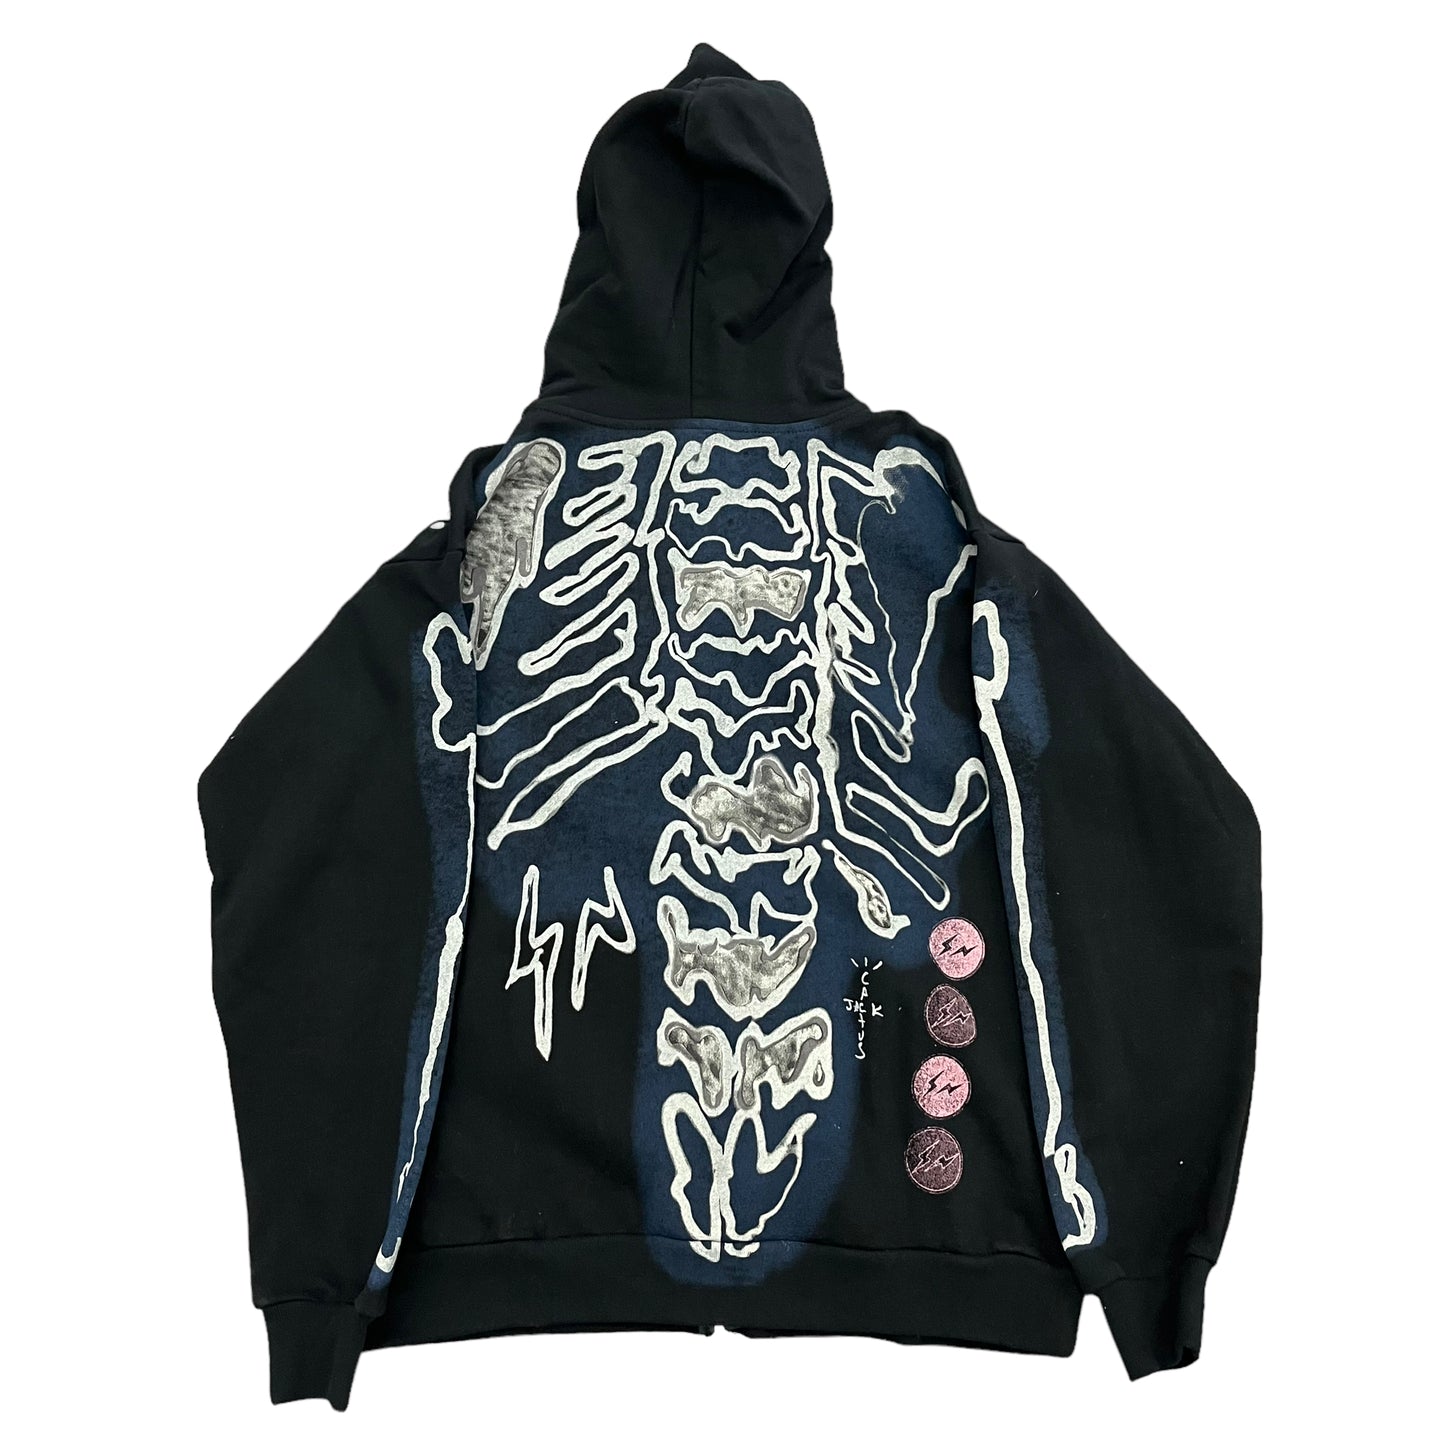 Travis Scott x Fragment Skeleton Zip Up Jacket